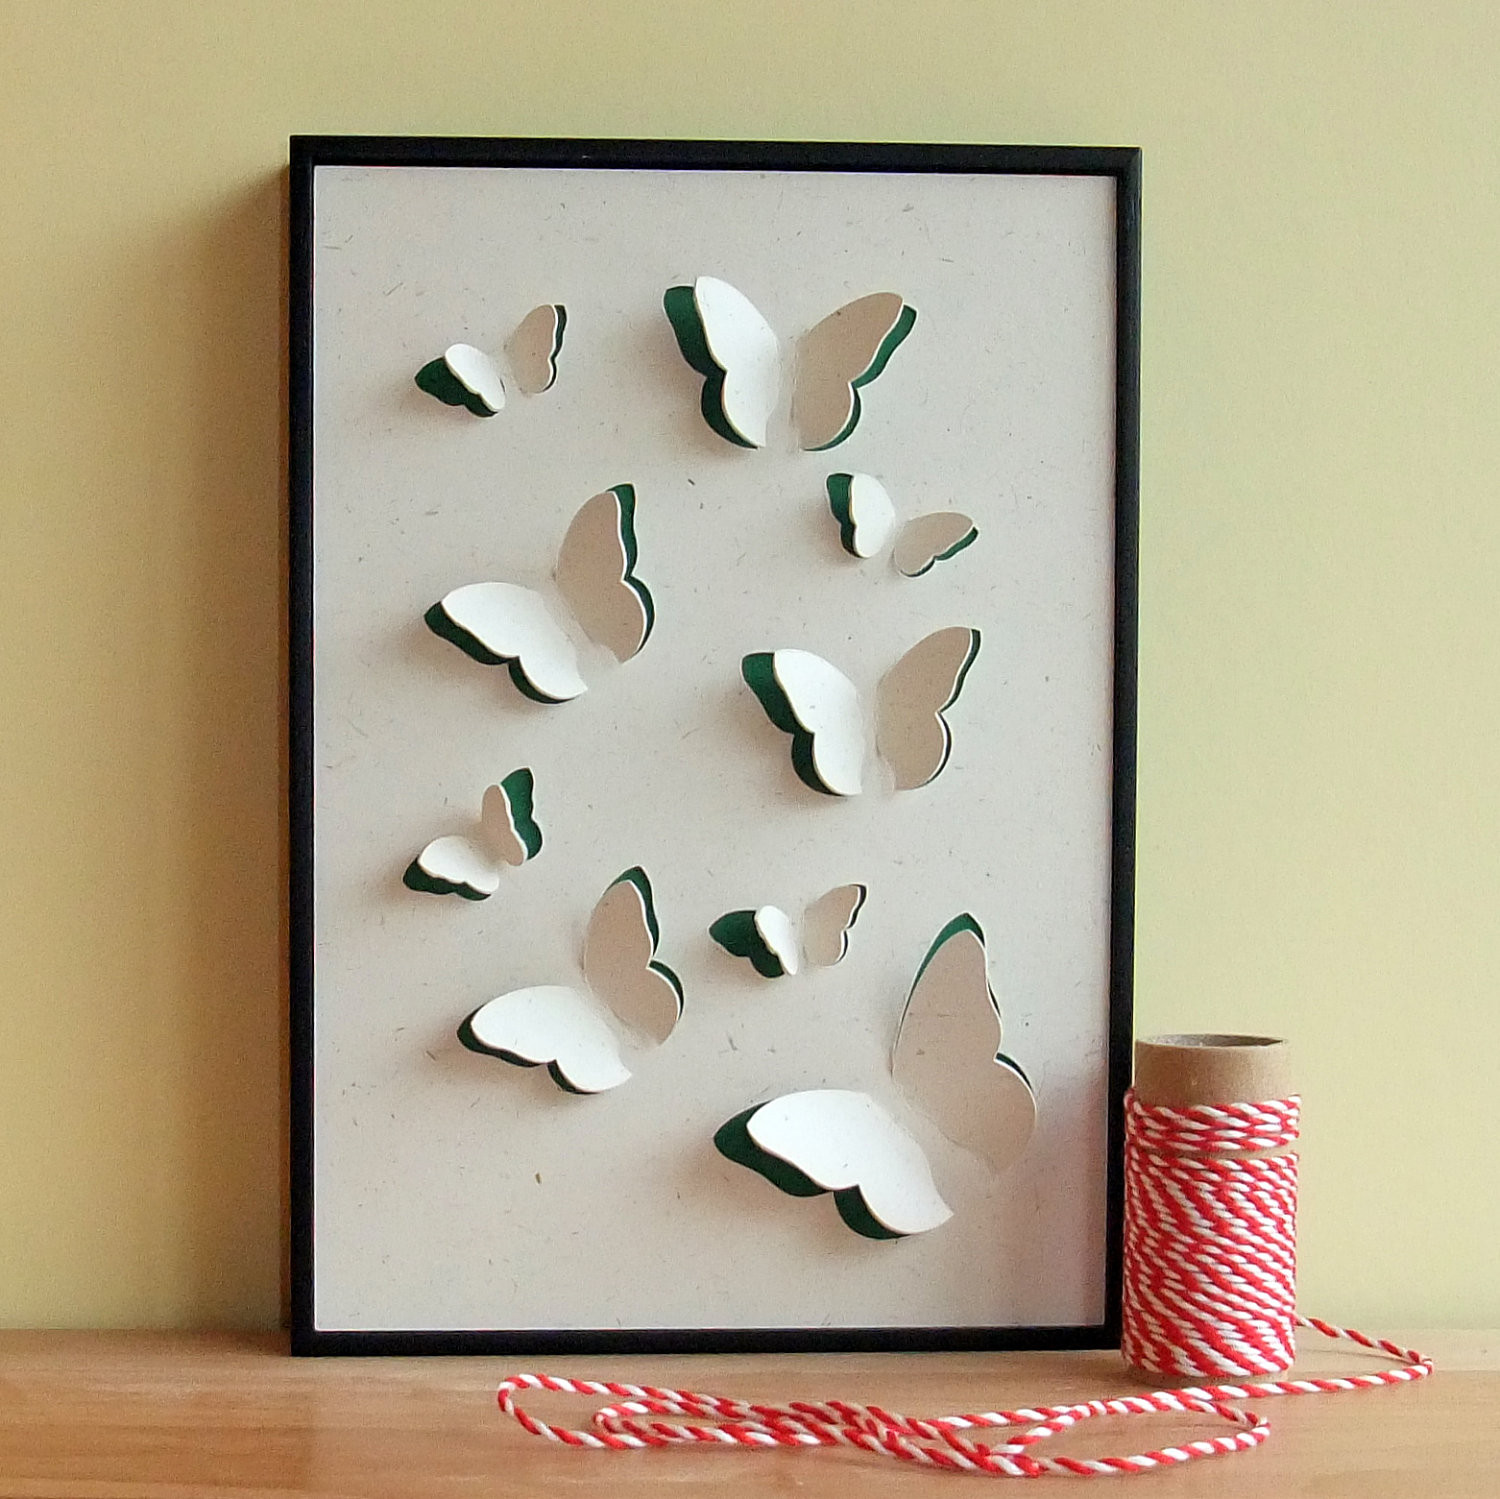 Best ideas about 3D Wall Art
. Save or Pin Butterfly Art Hand Cut 3D Framed Wall Art on Luulla Now.